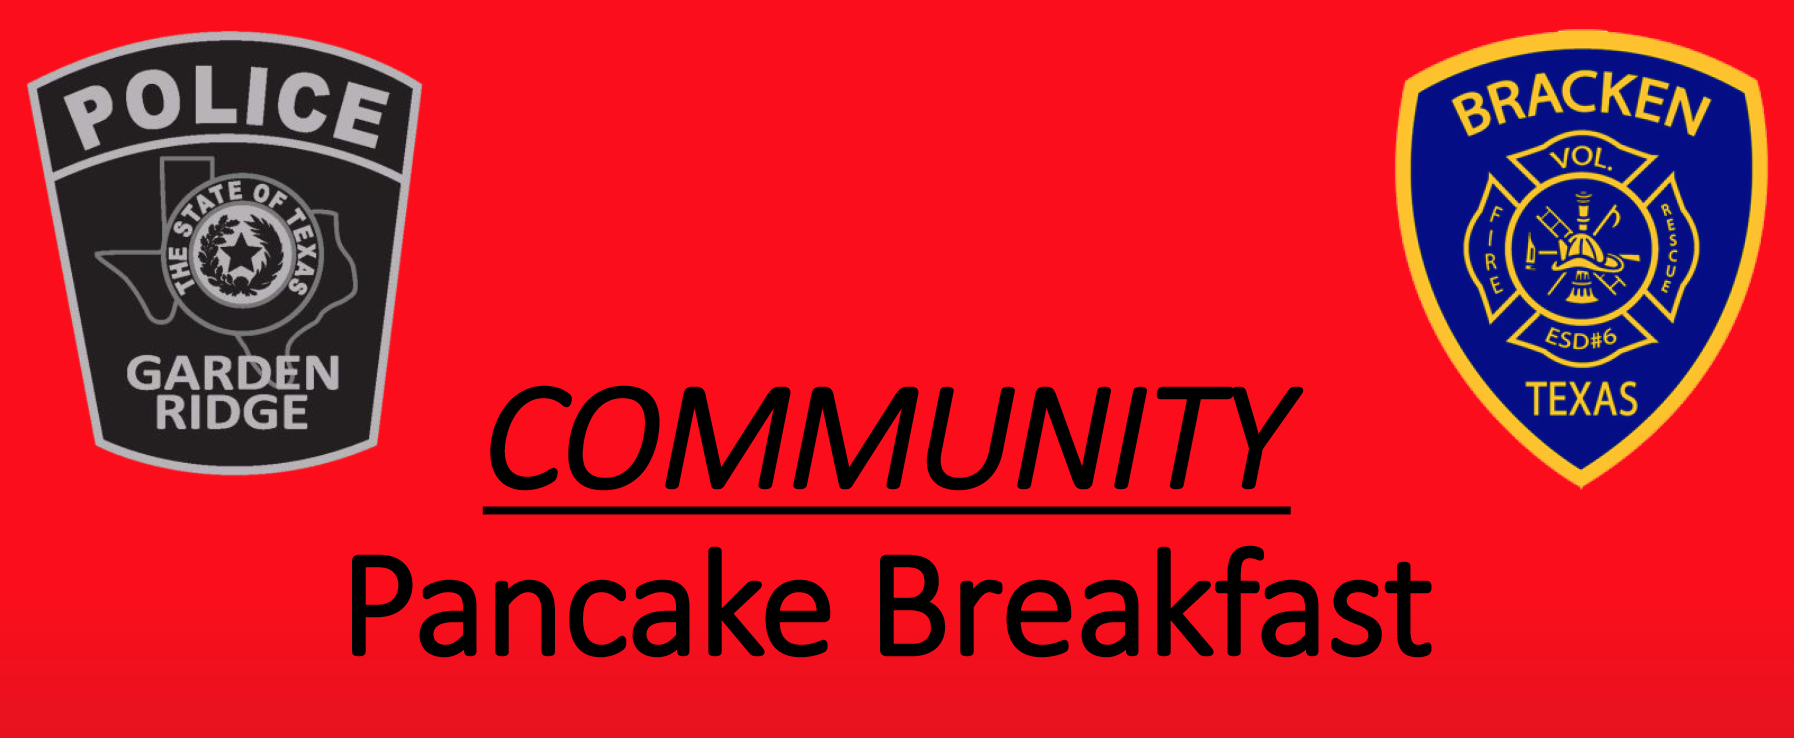 Community Pancake Breakfast